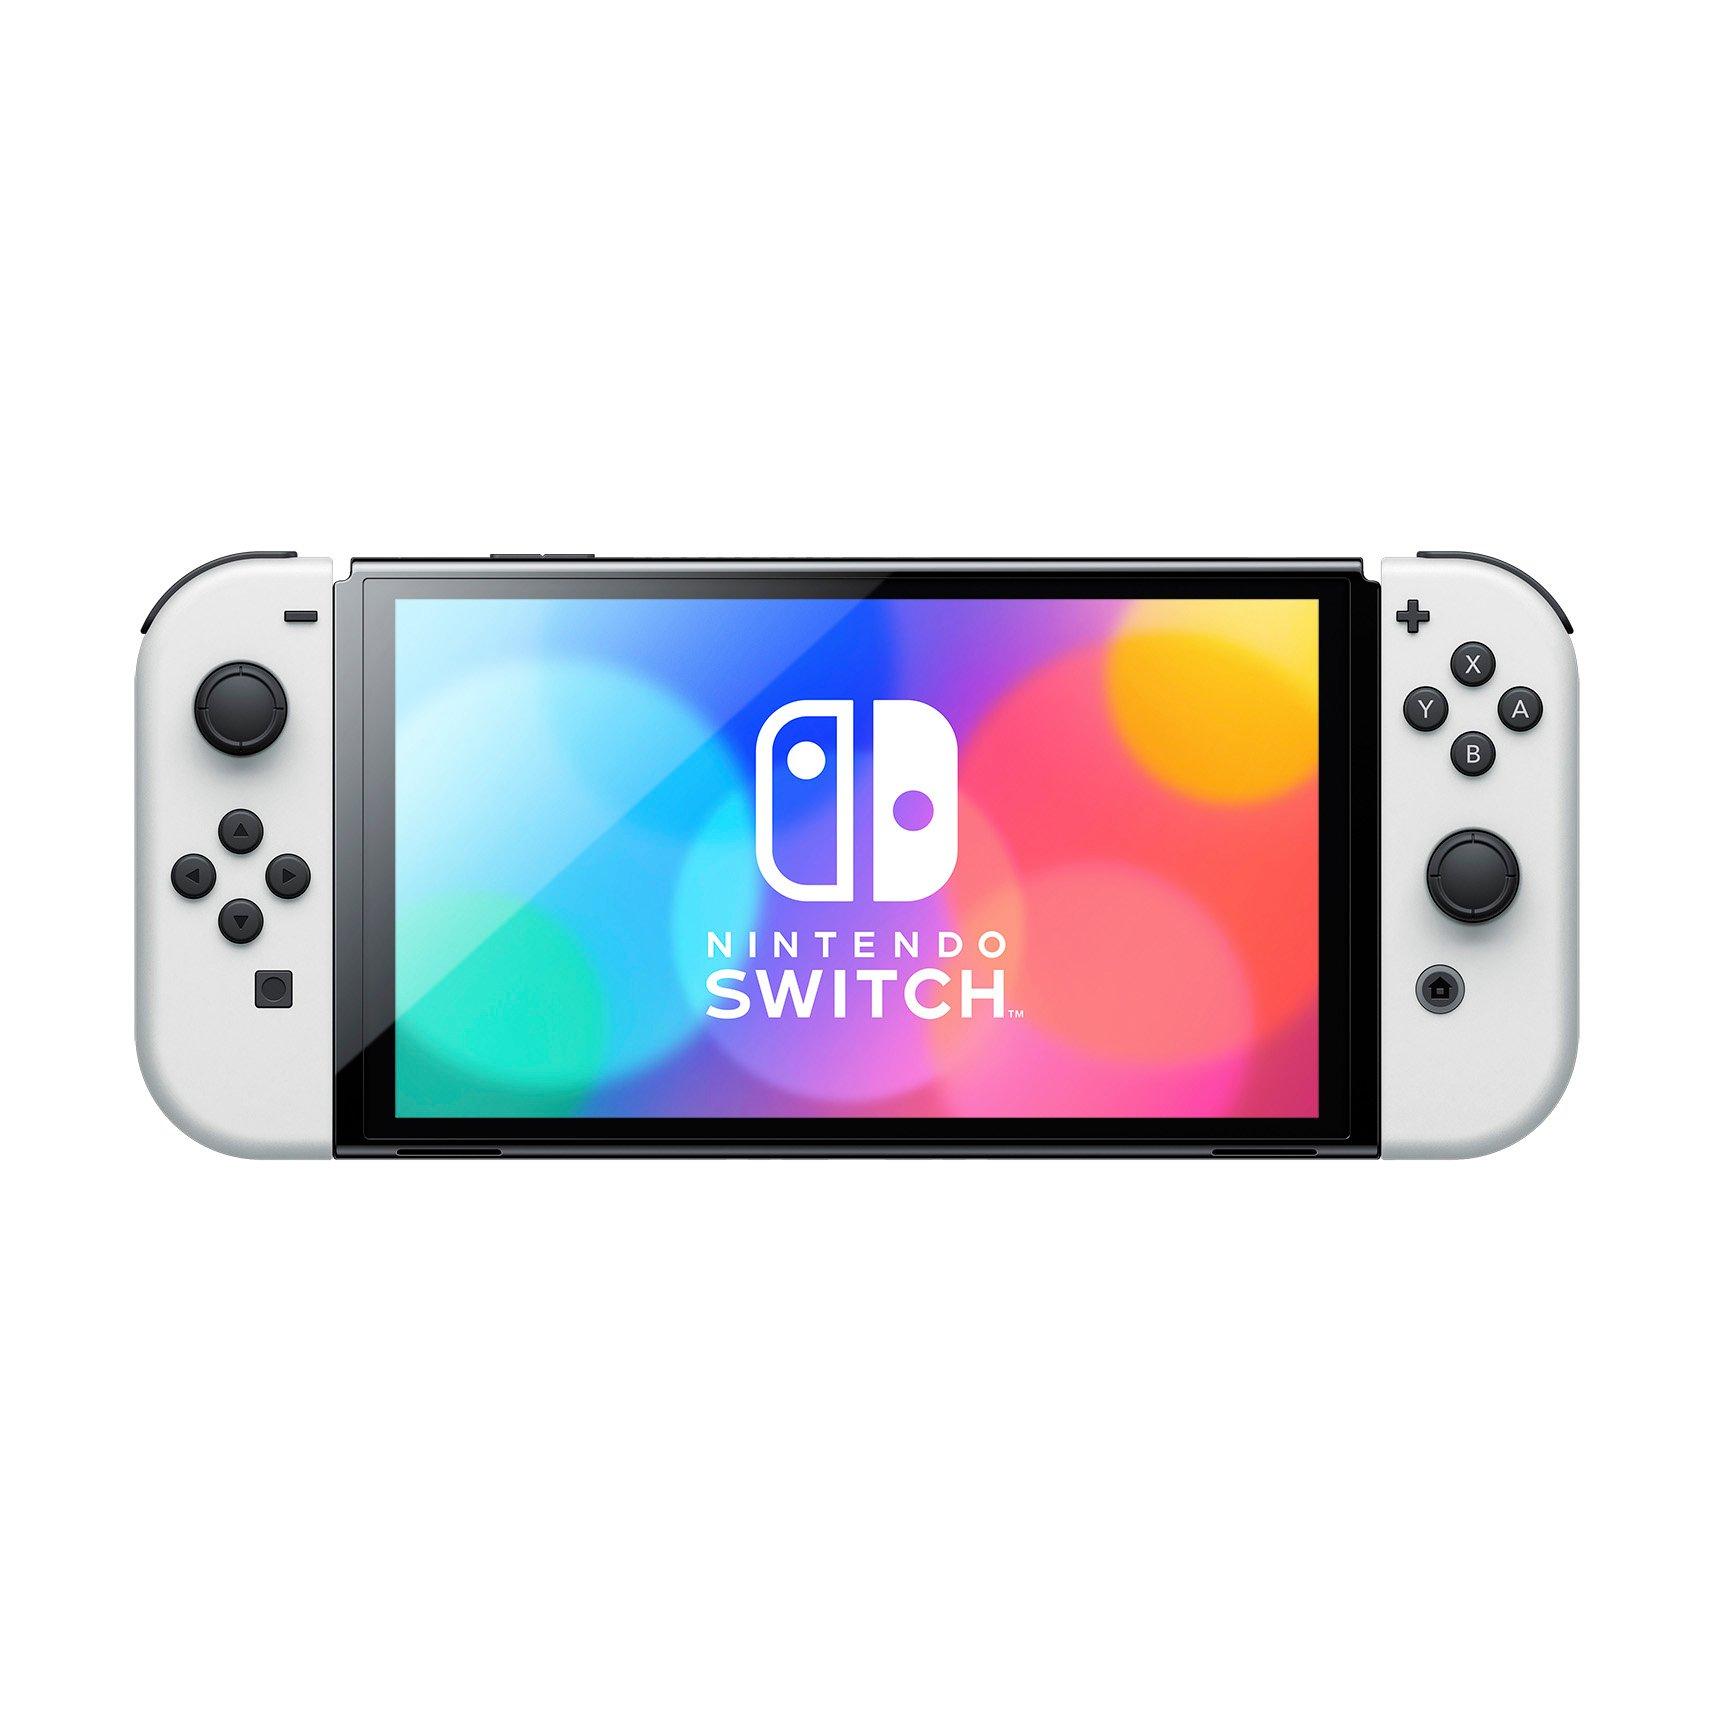 Nintendo Switch – OLED Model w/ White Joy-Con $349.99 free s&h @ GameStop $350